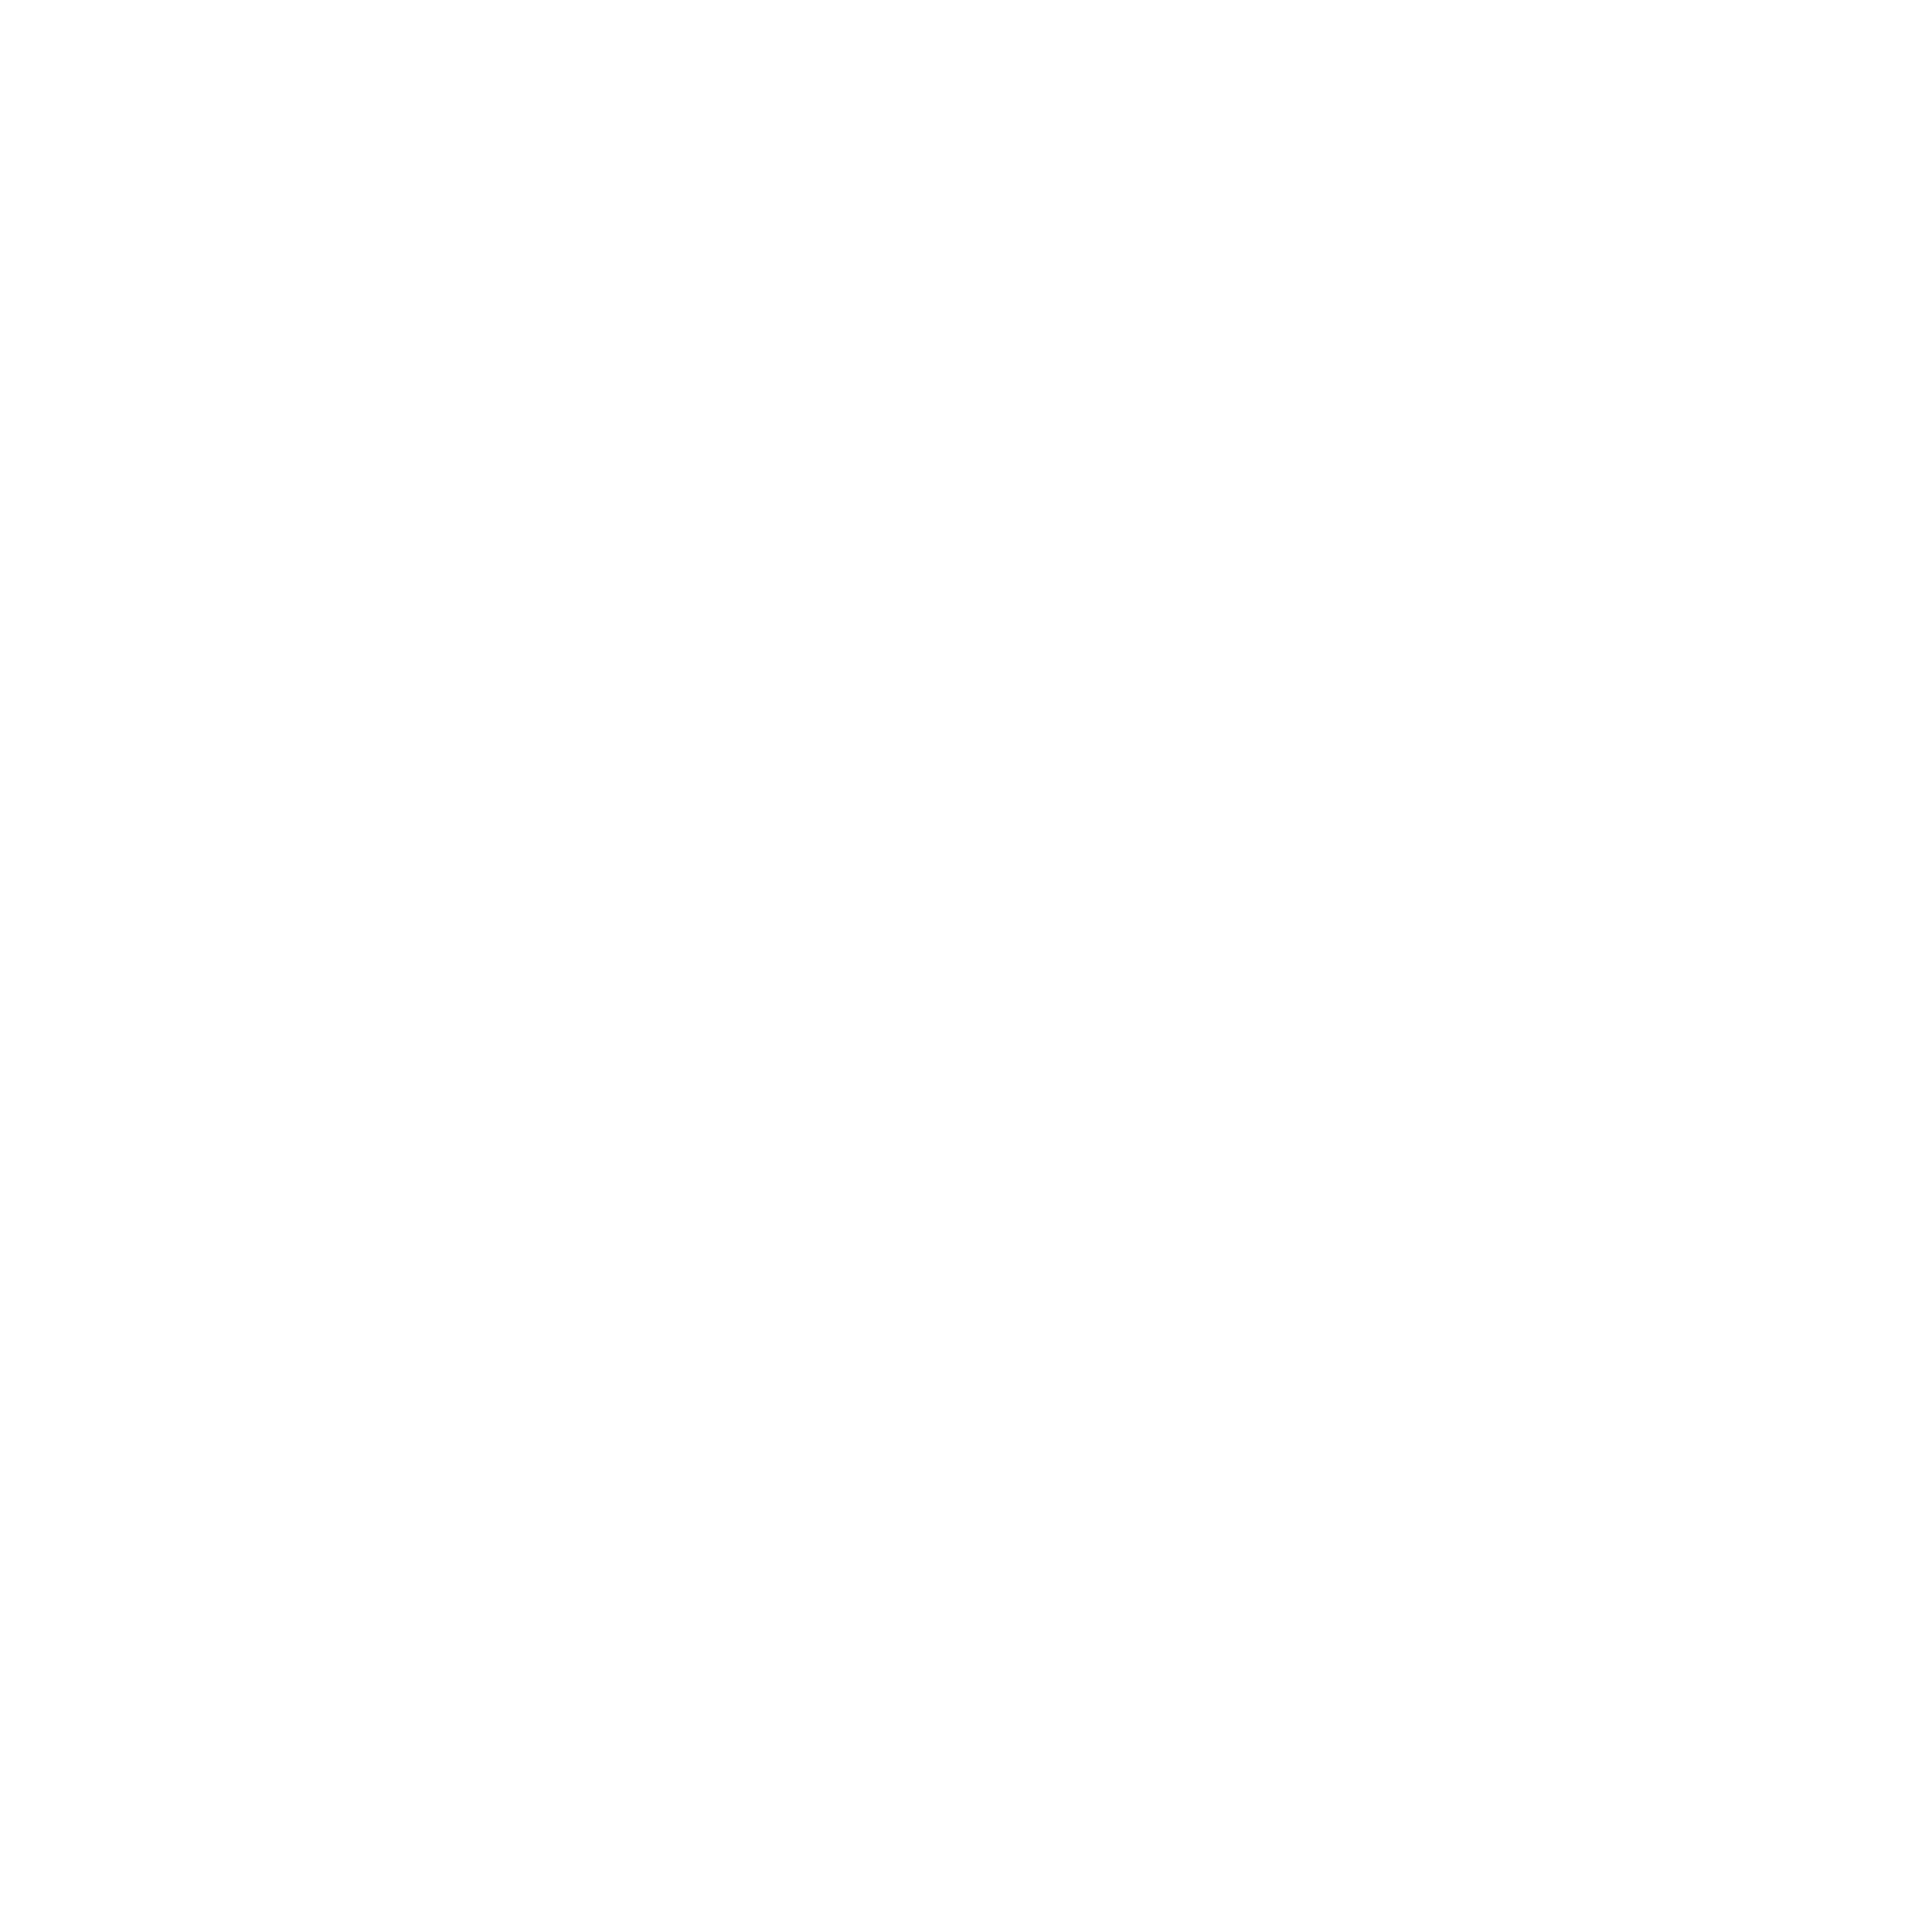 We Make Place